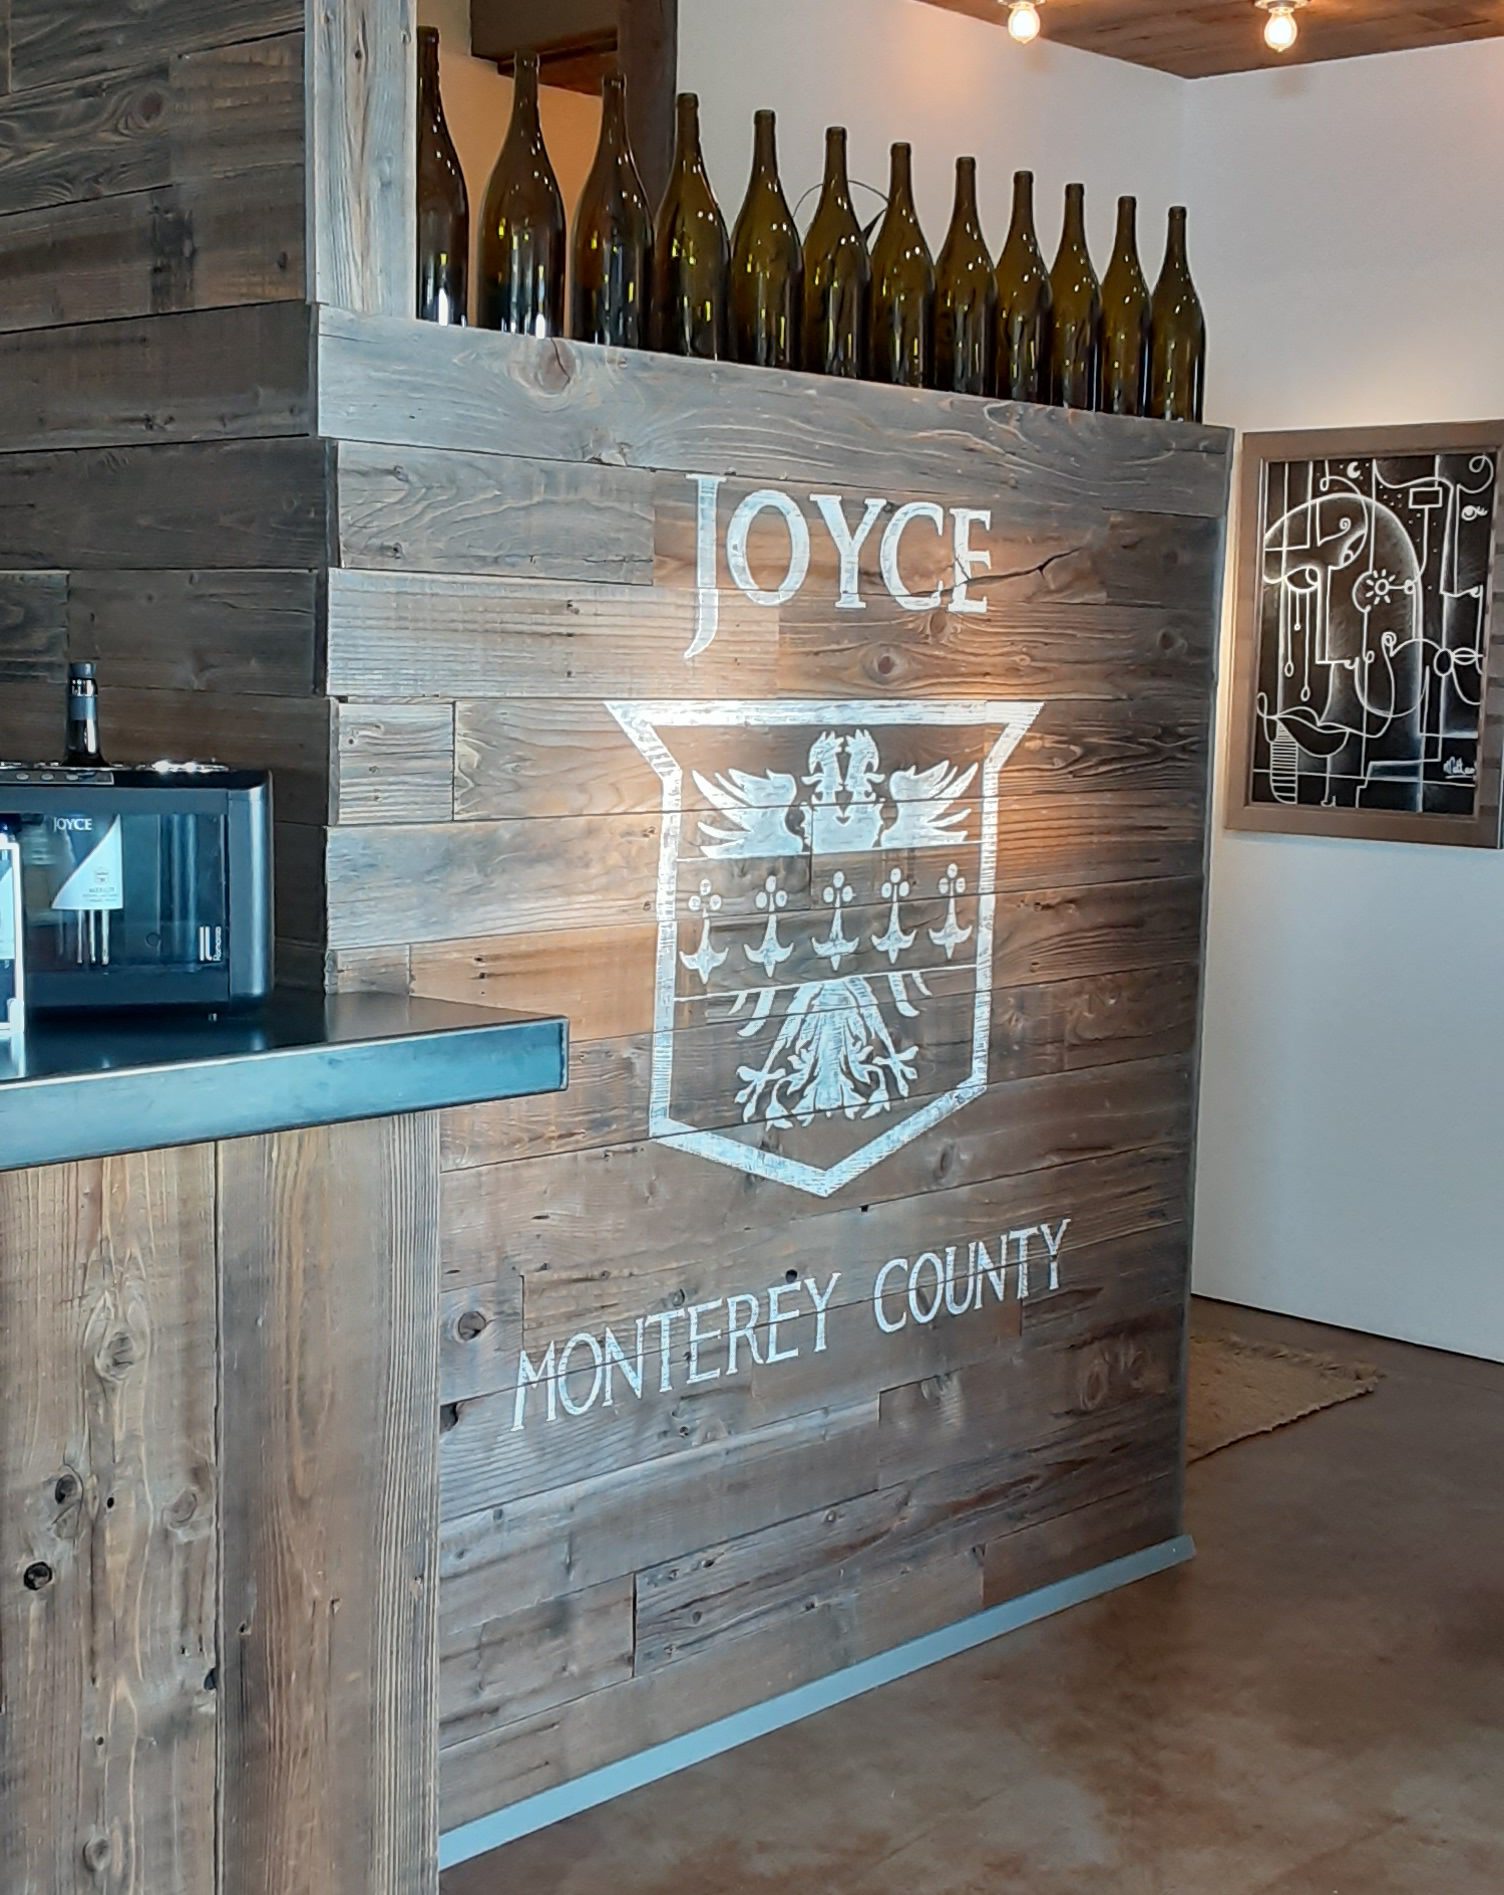 Joyce Wine Company counter